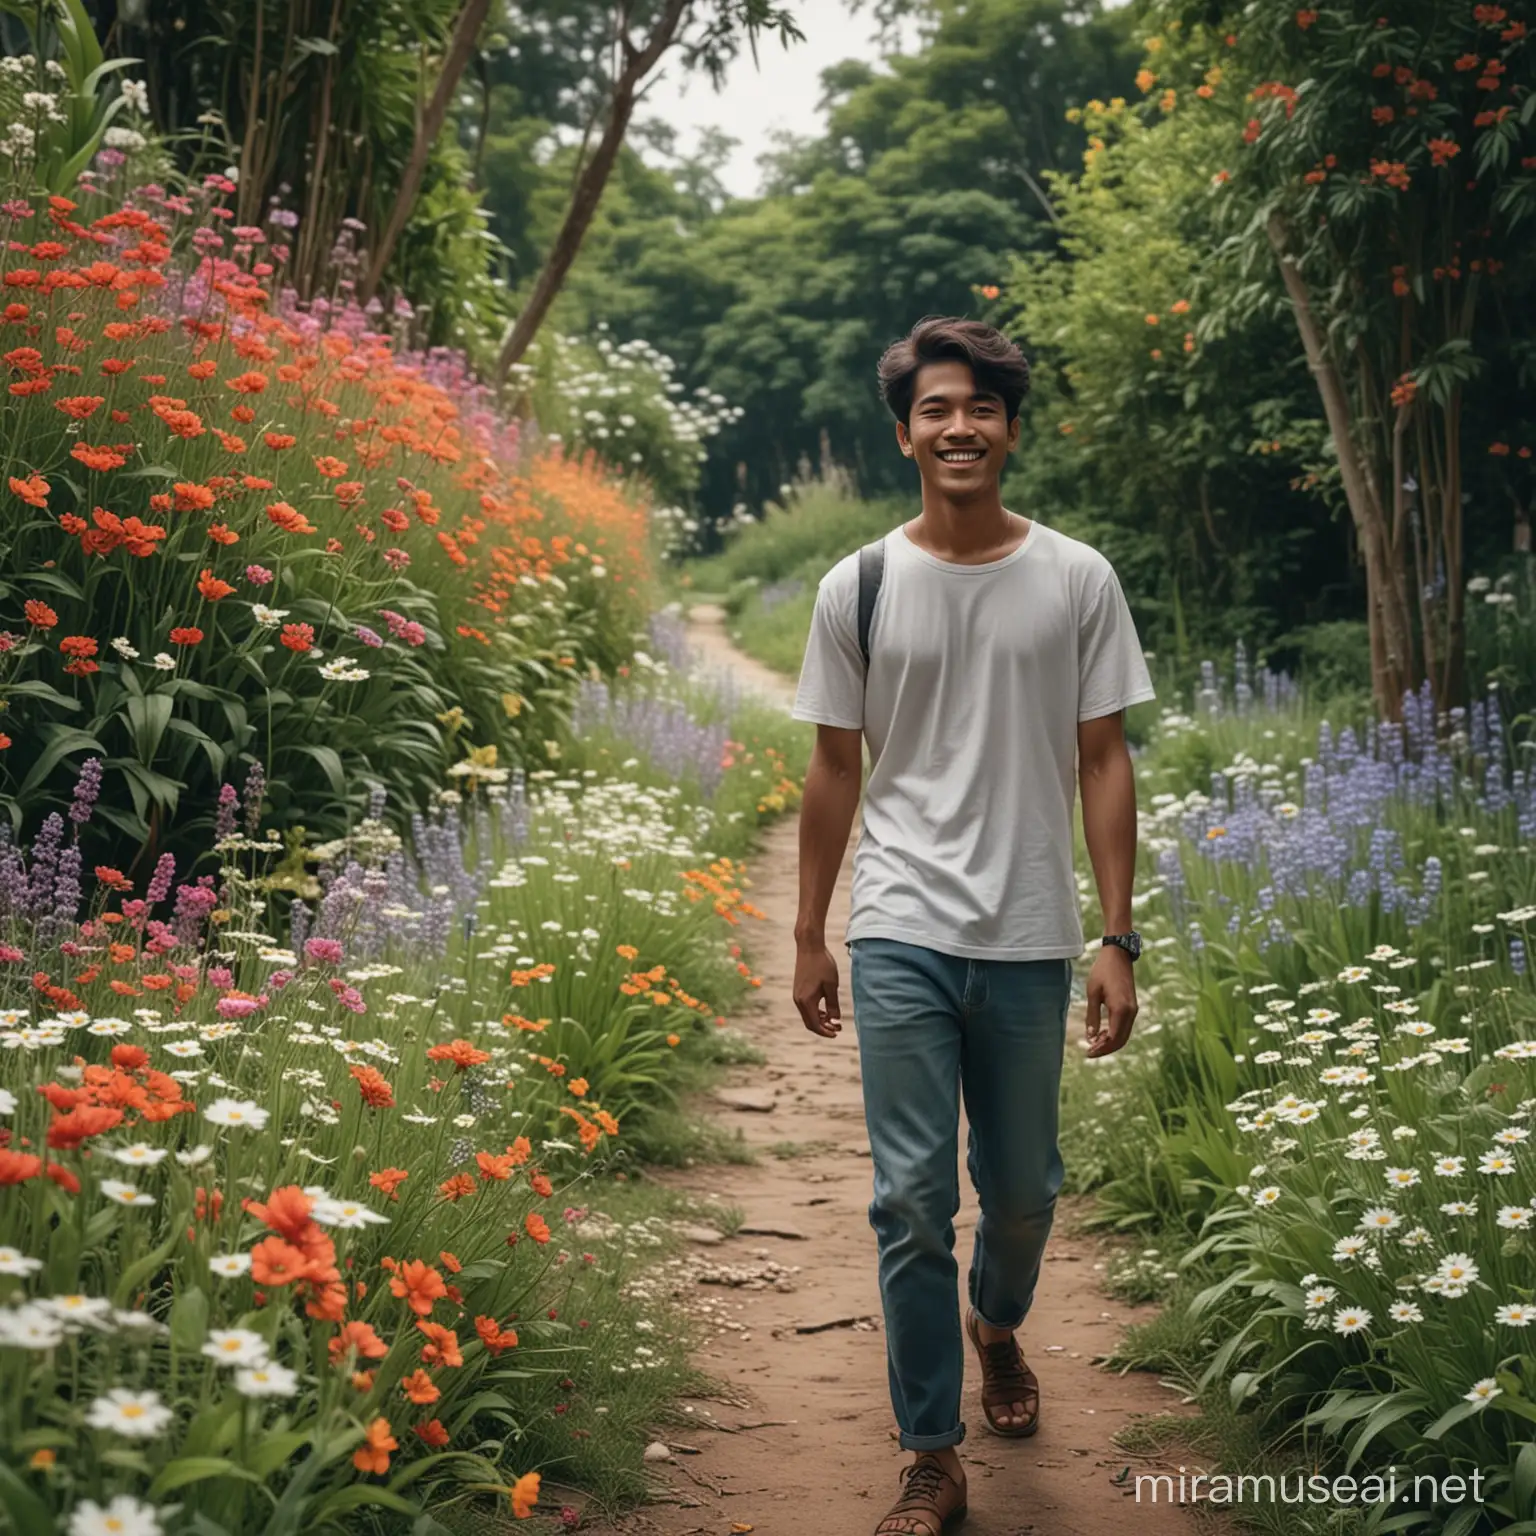 Indonesian Youth Strolling Through Wild Flower Garden in Cinematic Fashion